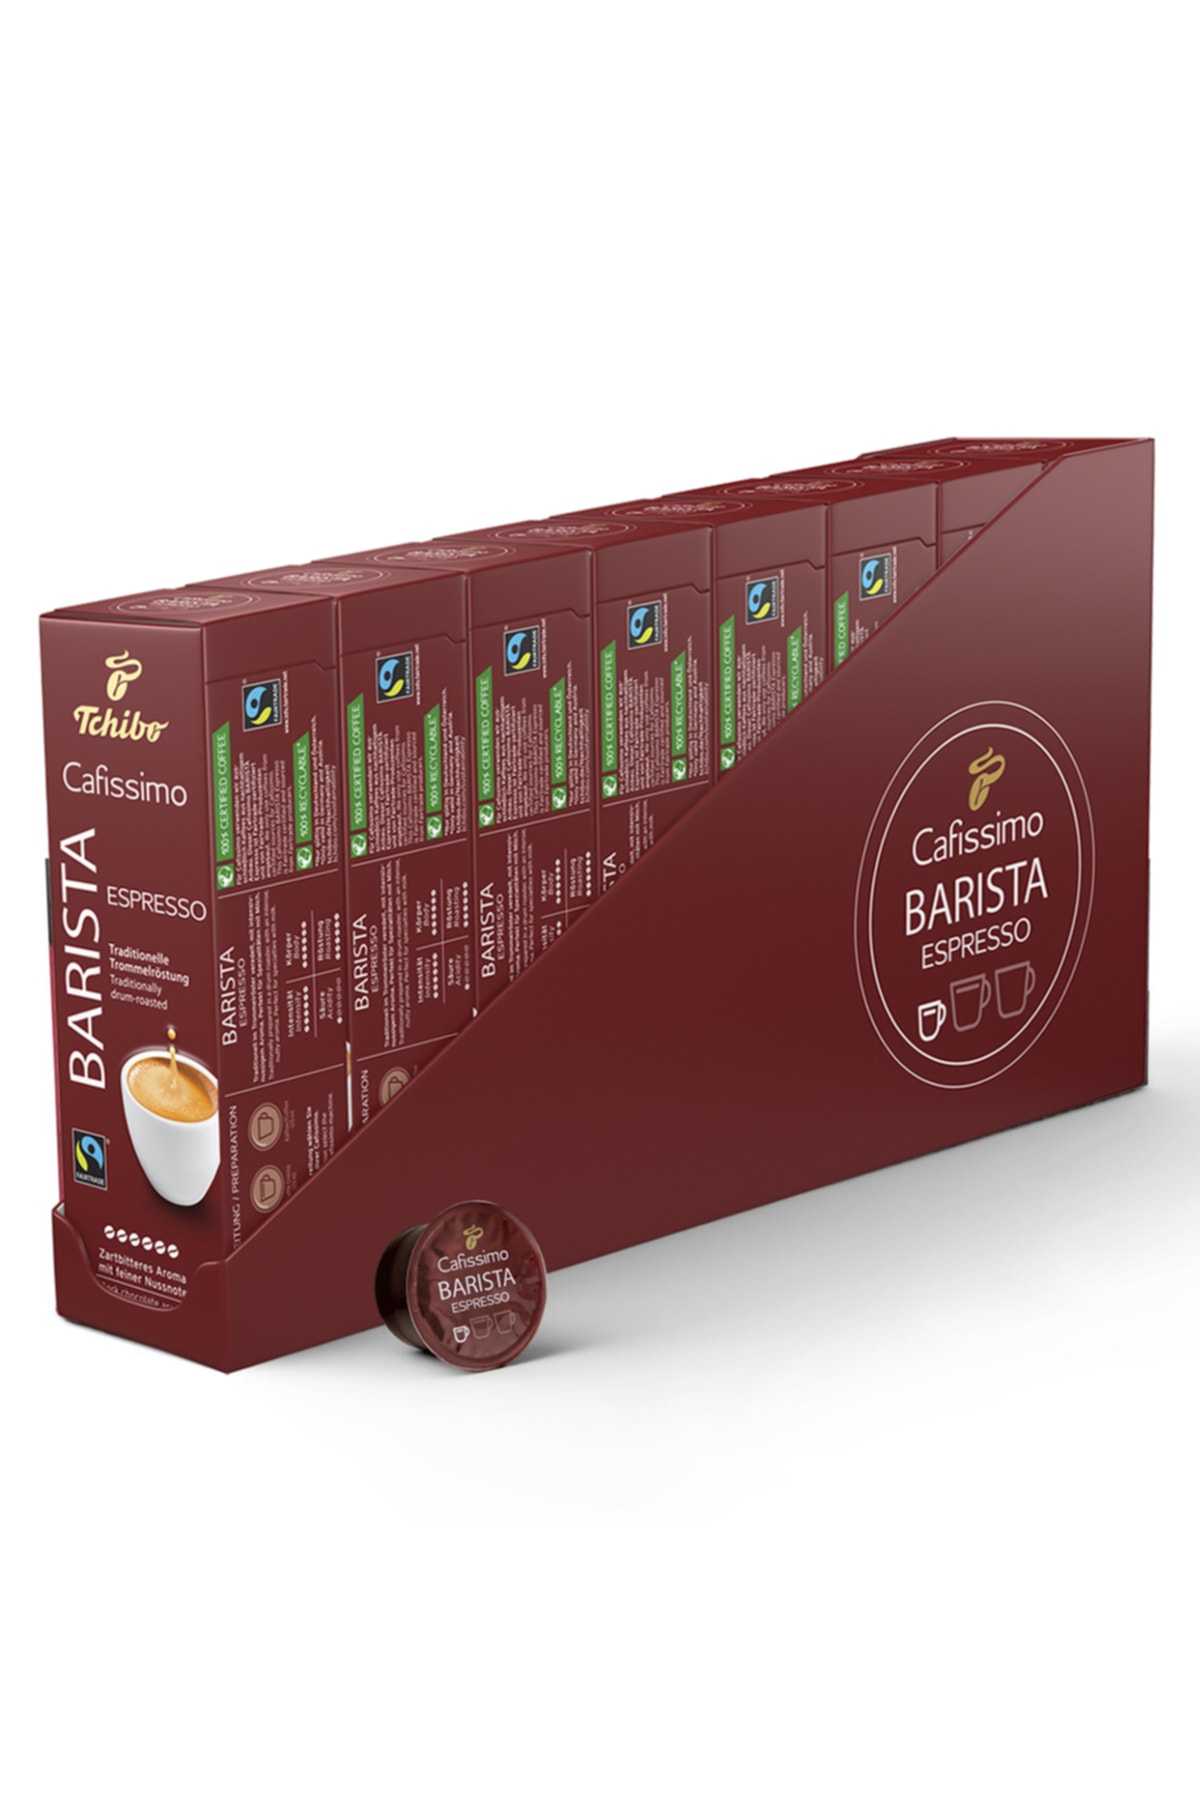 Tchibo Cafissimo Barista Espresso 80 Adet Kapsül Kahve - Avantajlı Paket